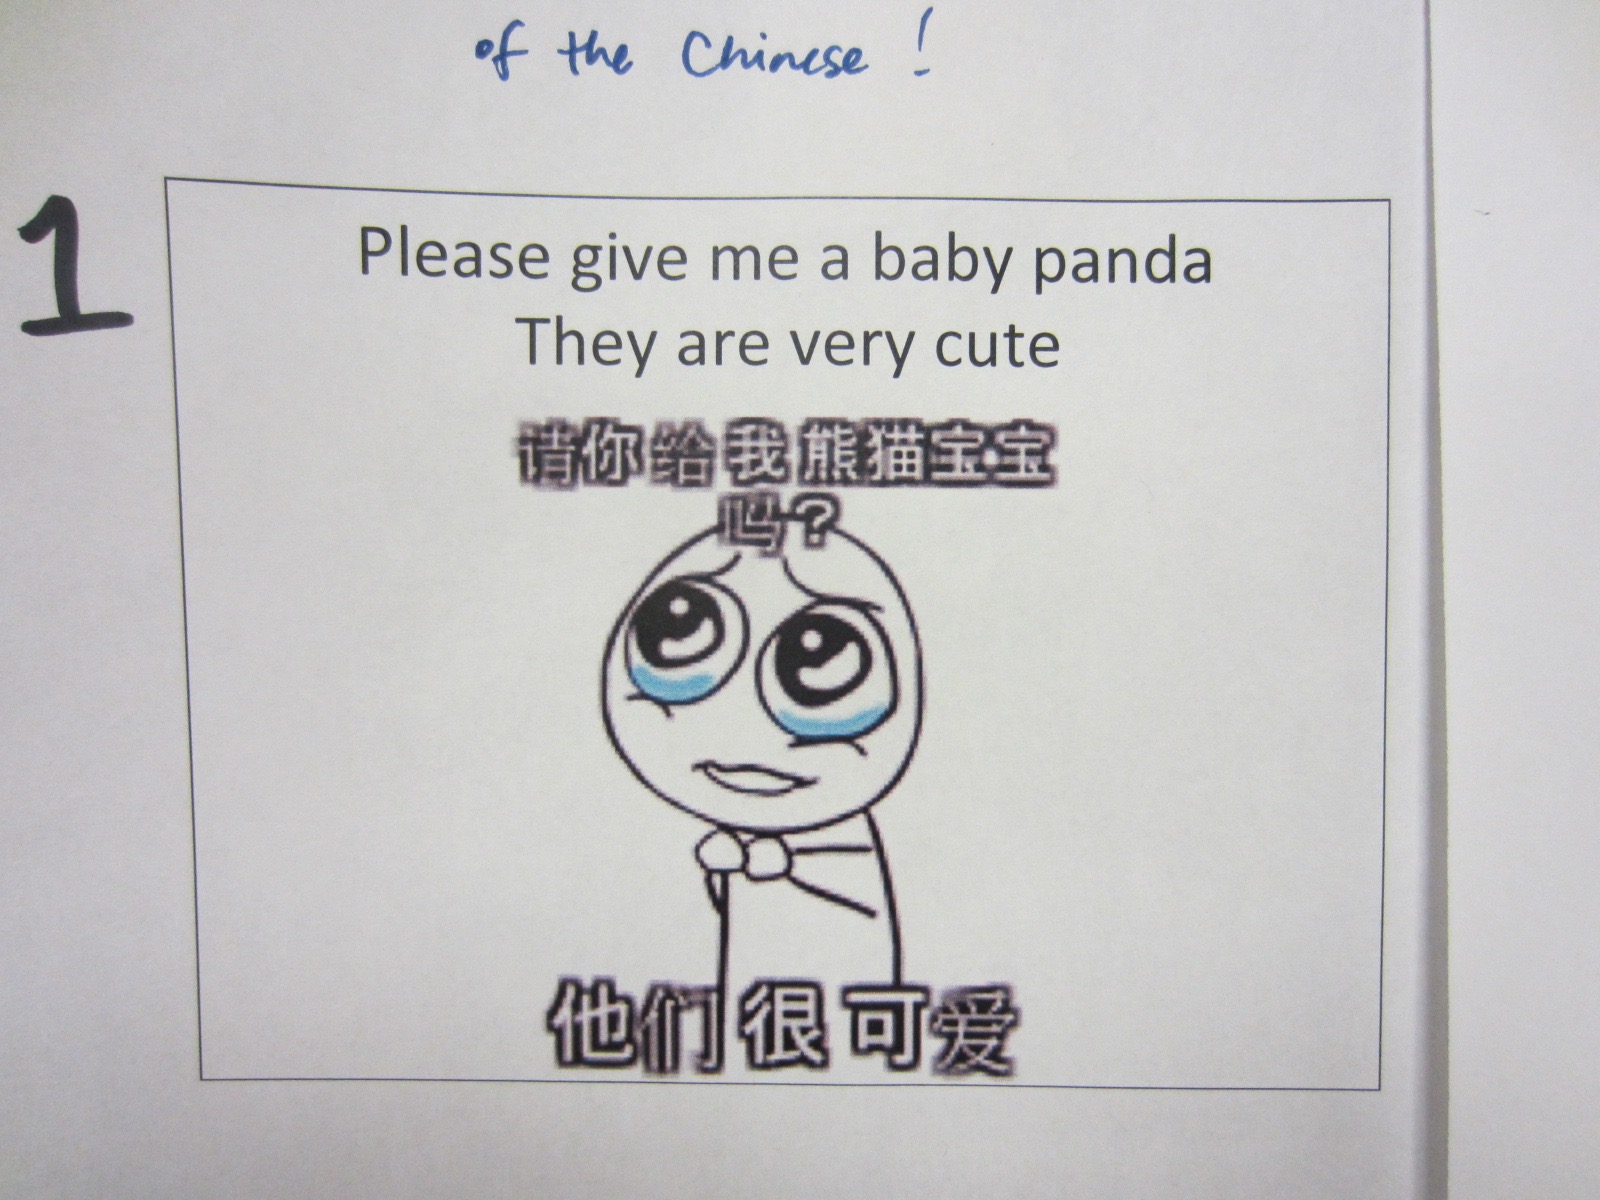 Chinese Memes In The Hallway Ignite Language